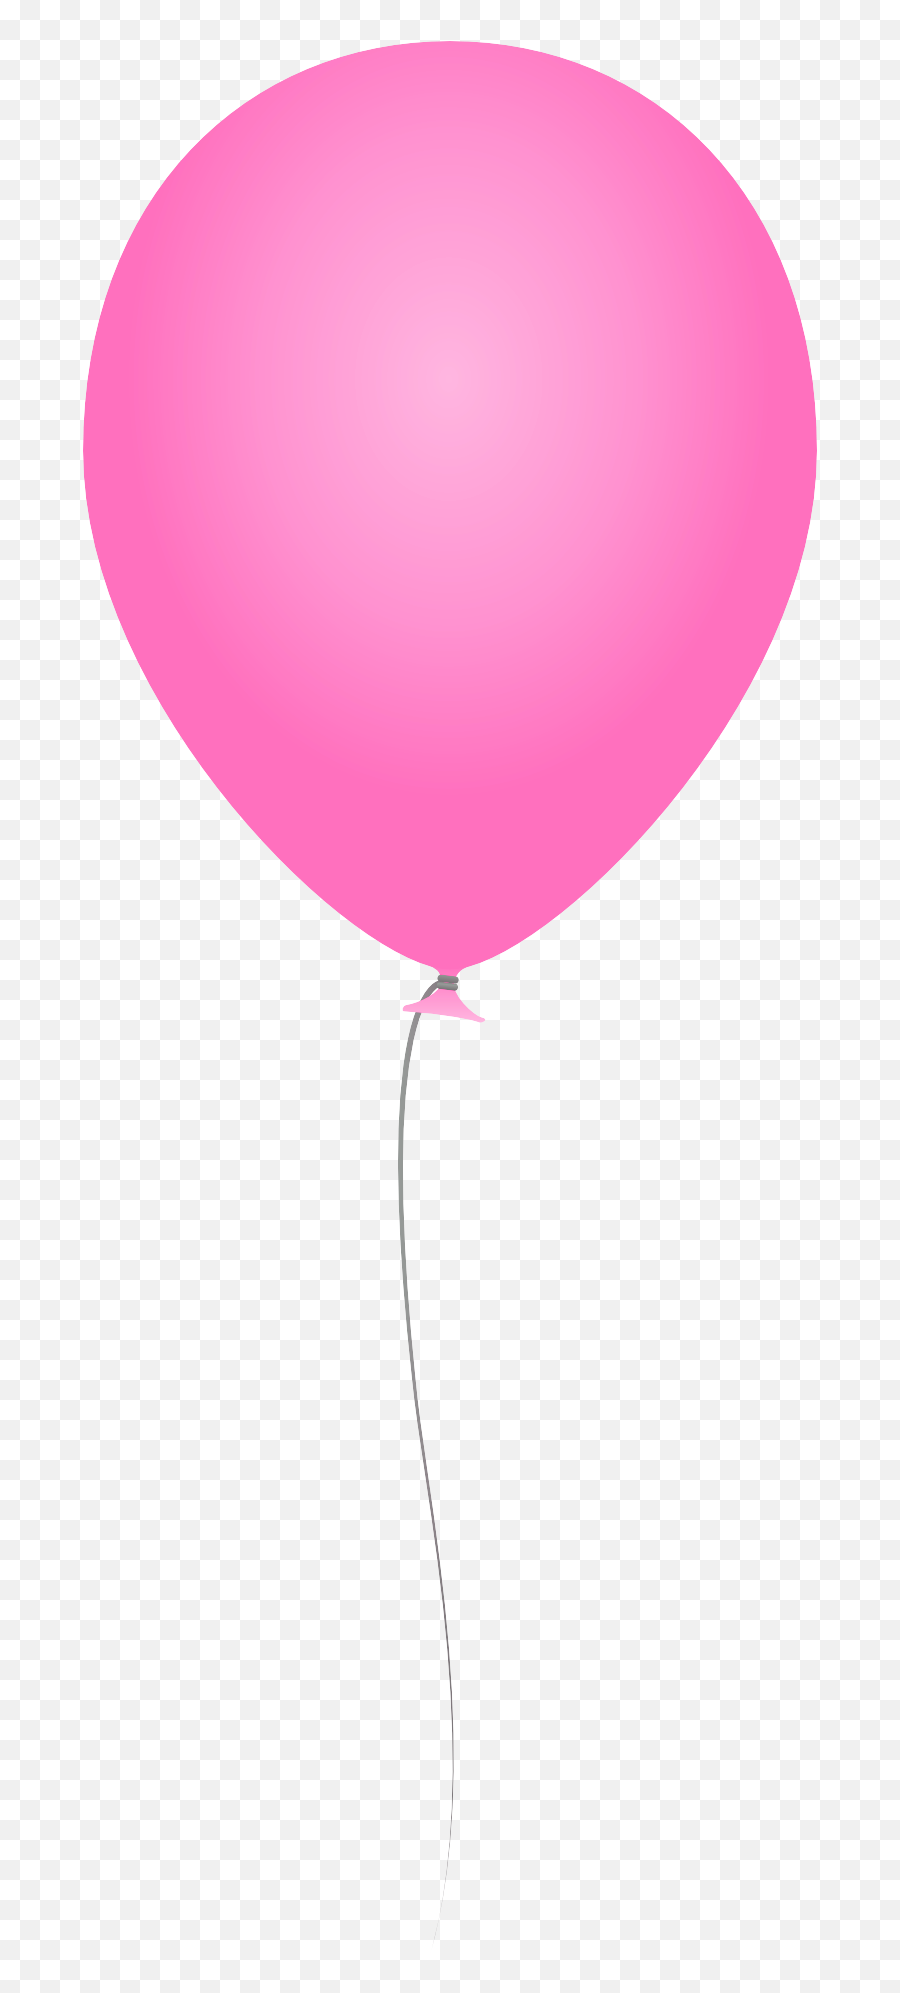 Vector Balloon Png Image - Png Format Balloon Vector Png,Balloon Png